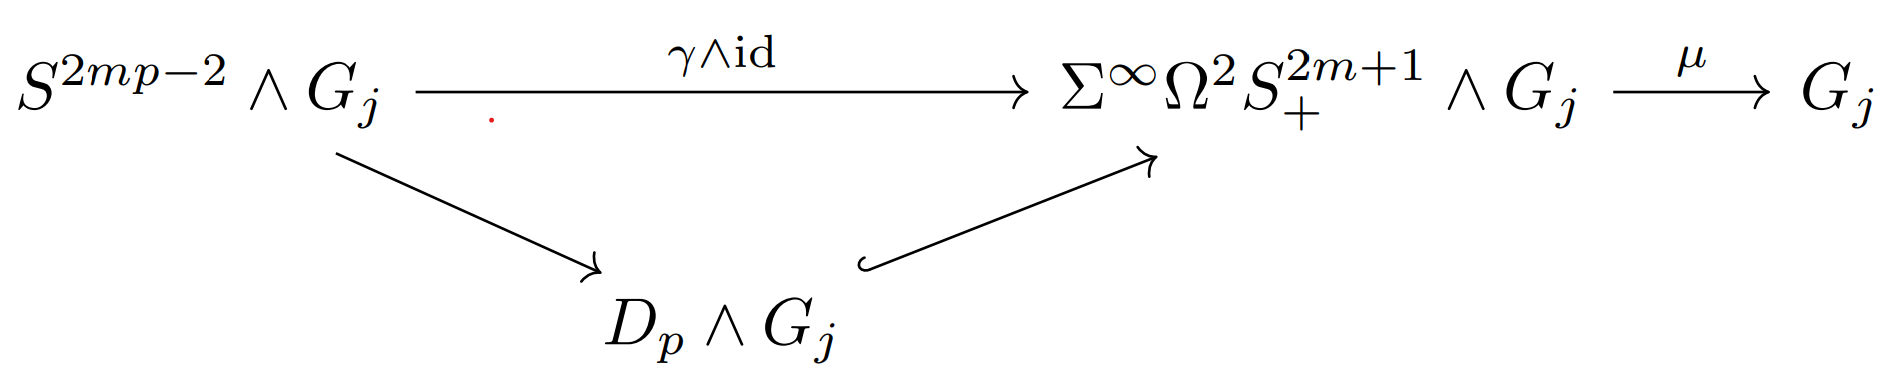 Commutative diagram